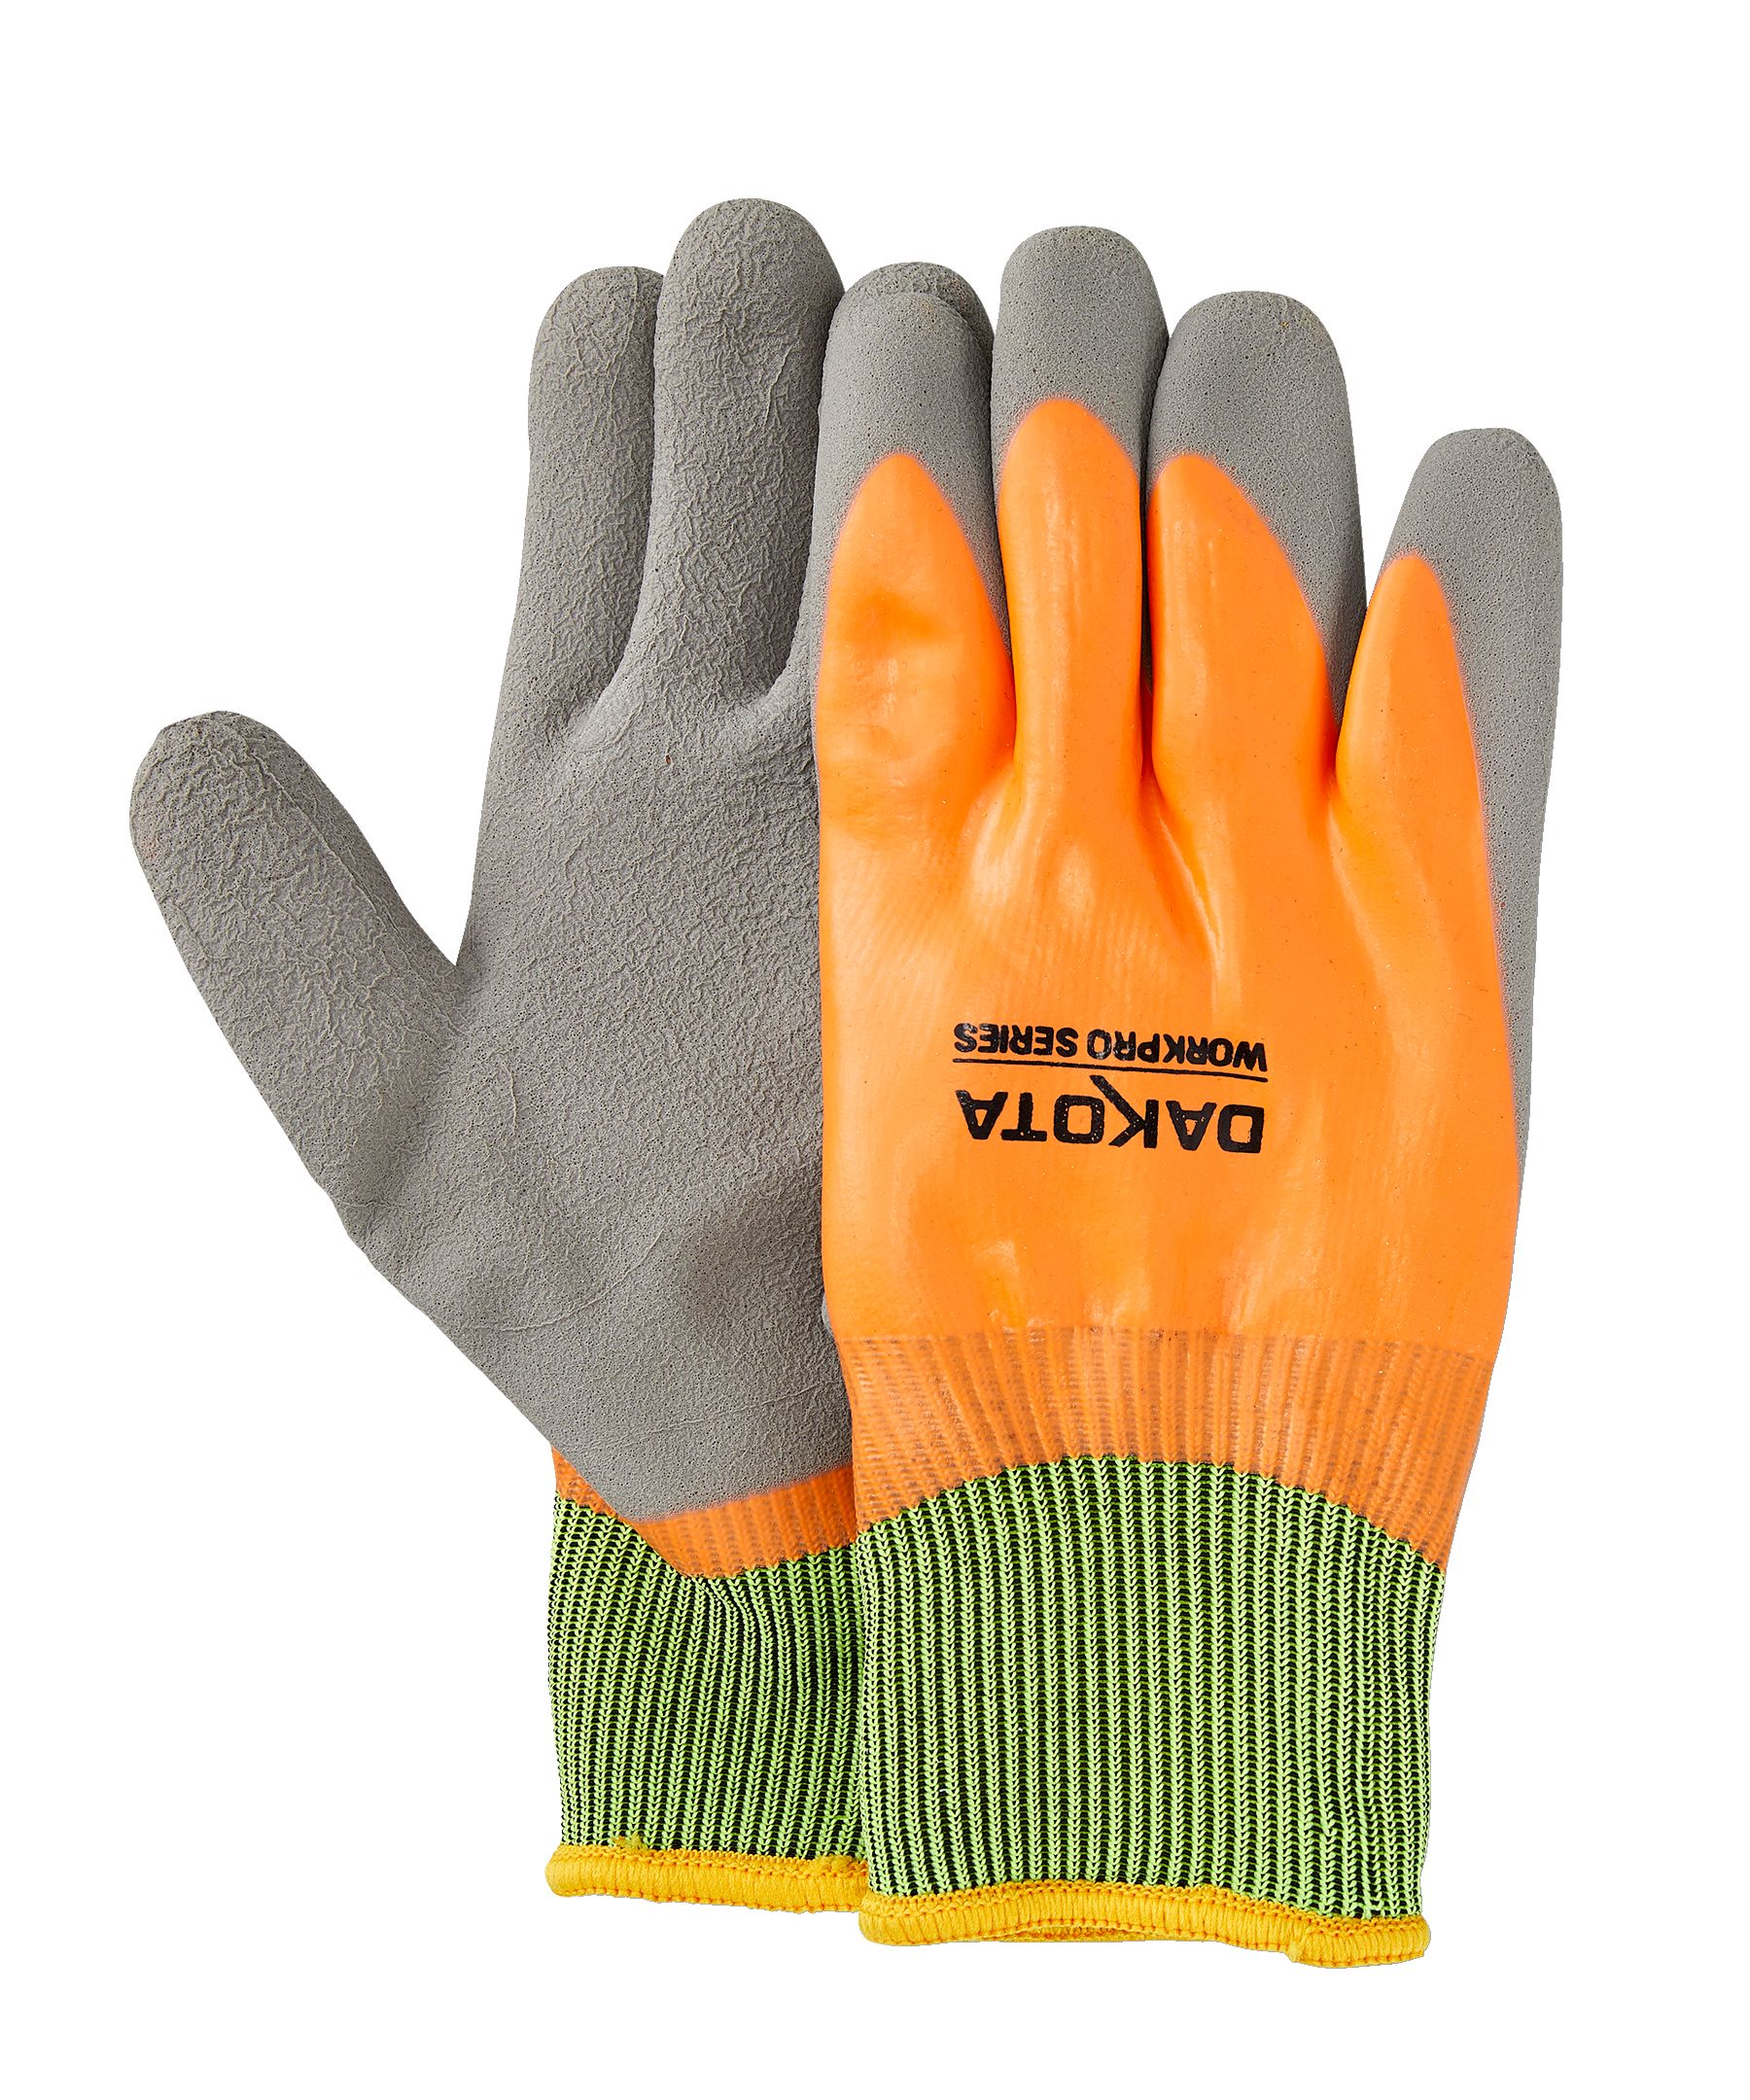 HUBERT®Essentials Pro Max Red Dyneema Serrated Cut Resistant Glove - Medium